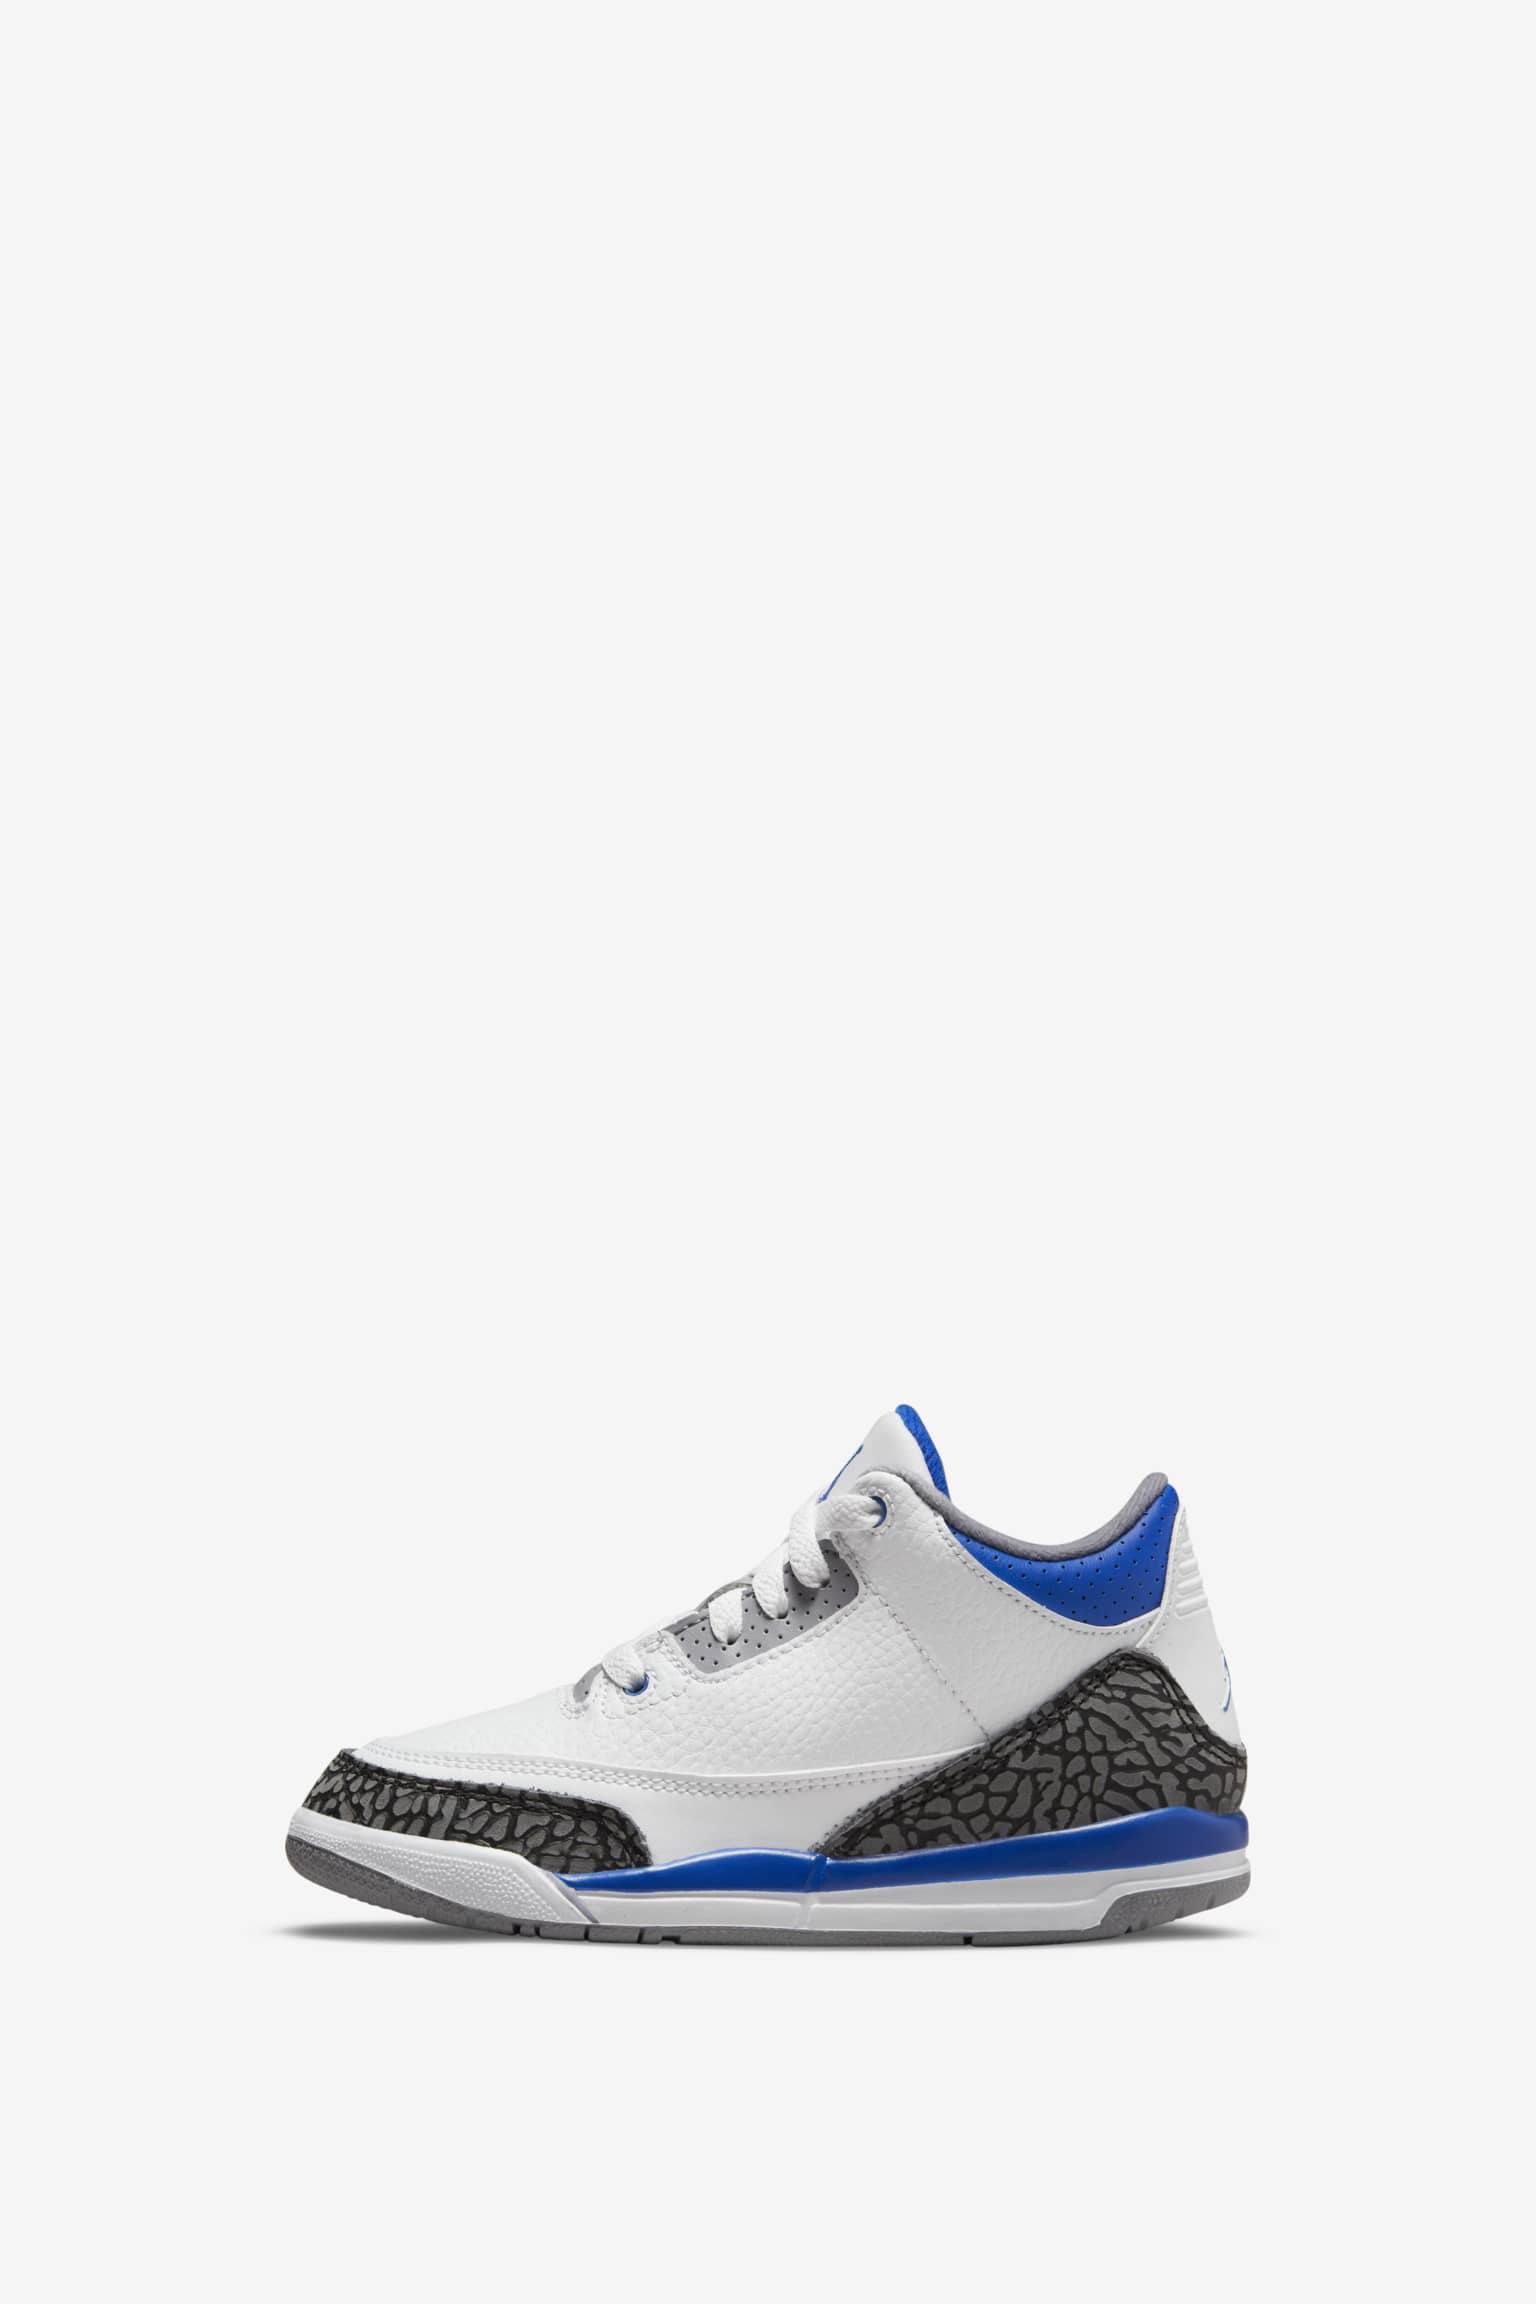 Date de sortie de la Air Jordan 3 Retro « Racer Blue ». Nike SNKRS FR